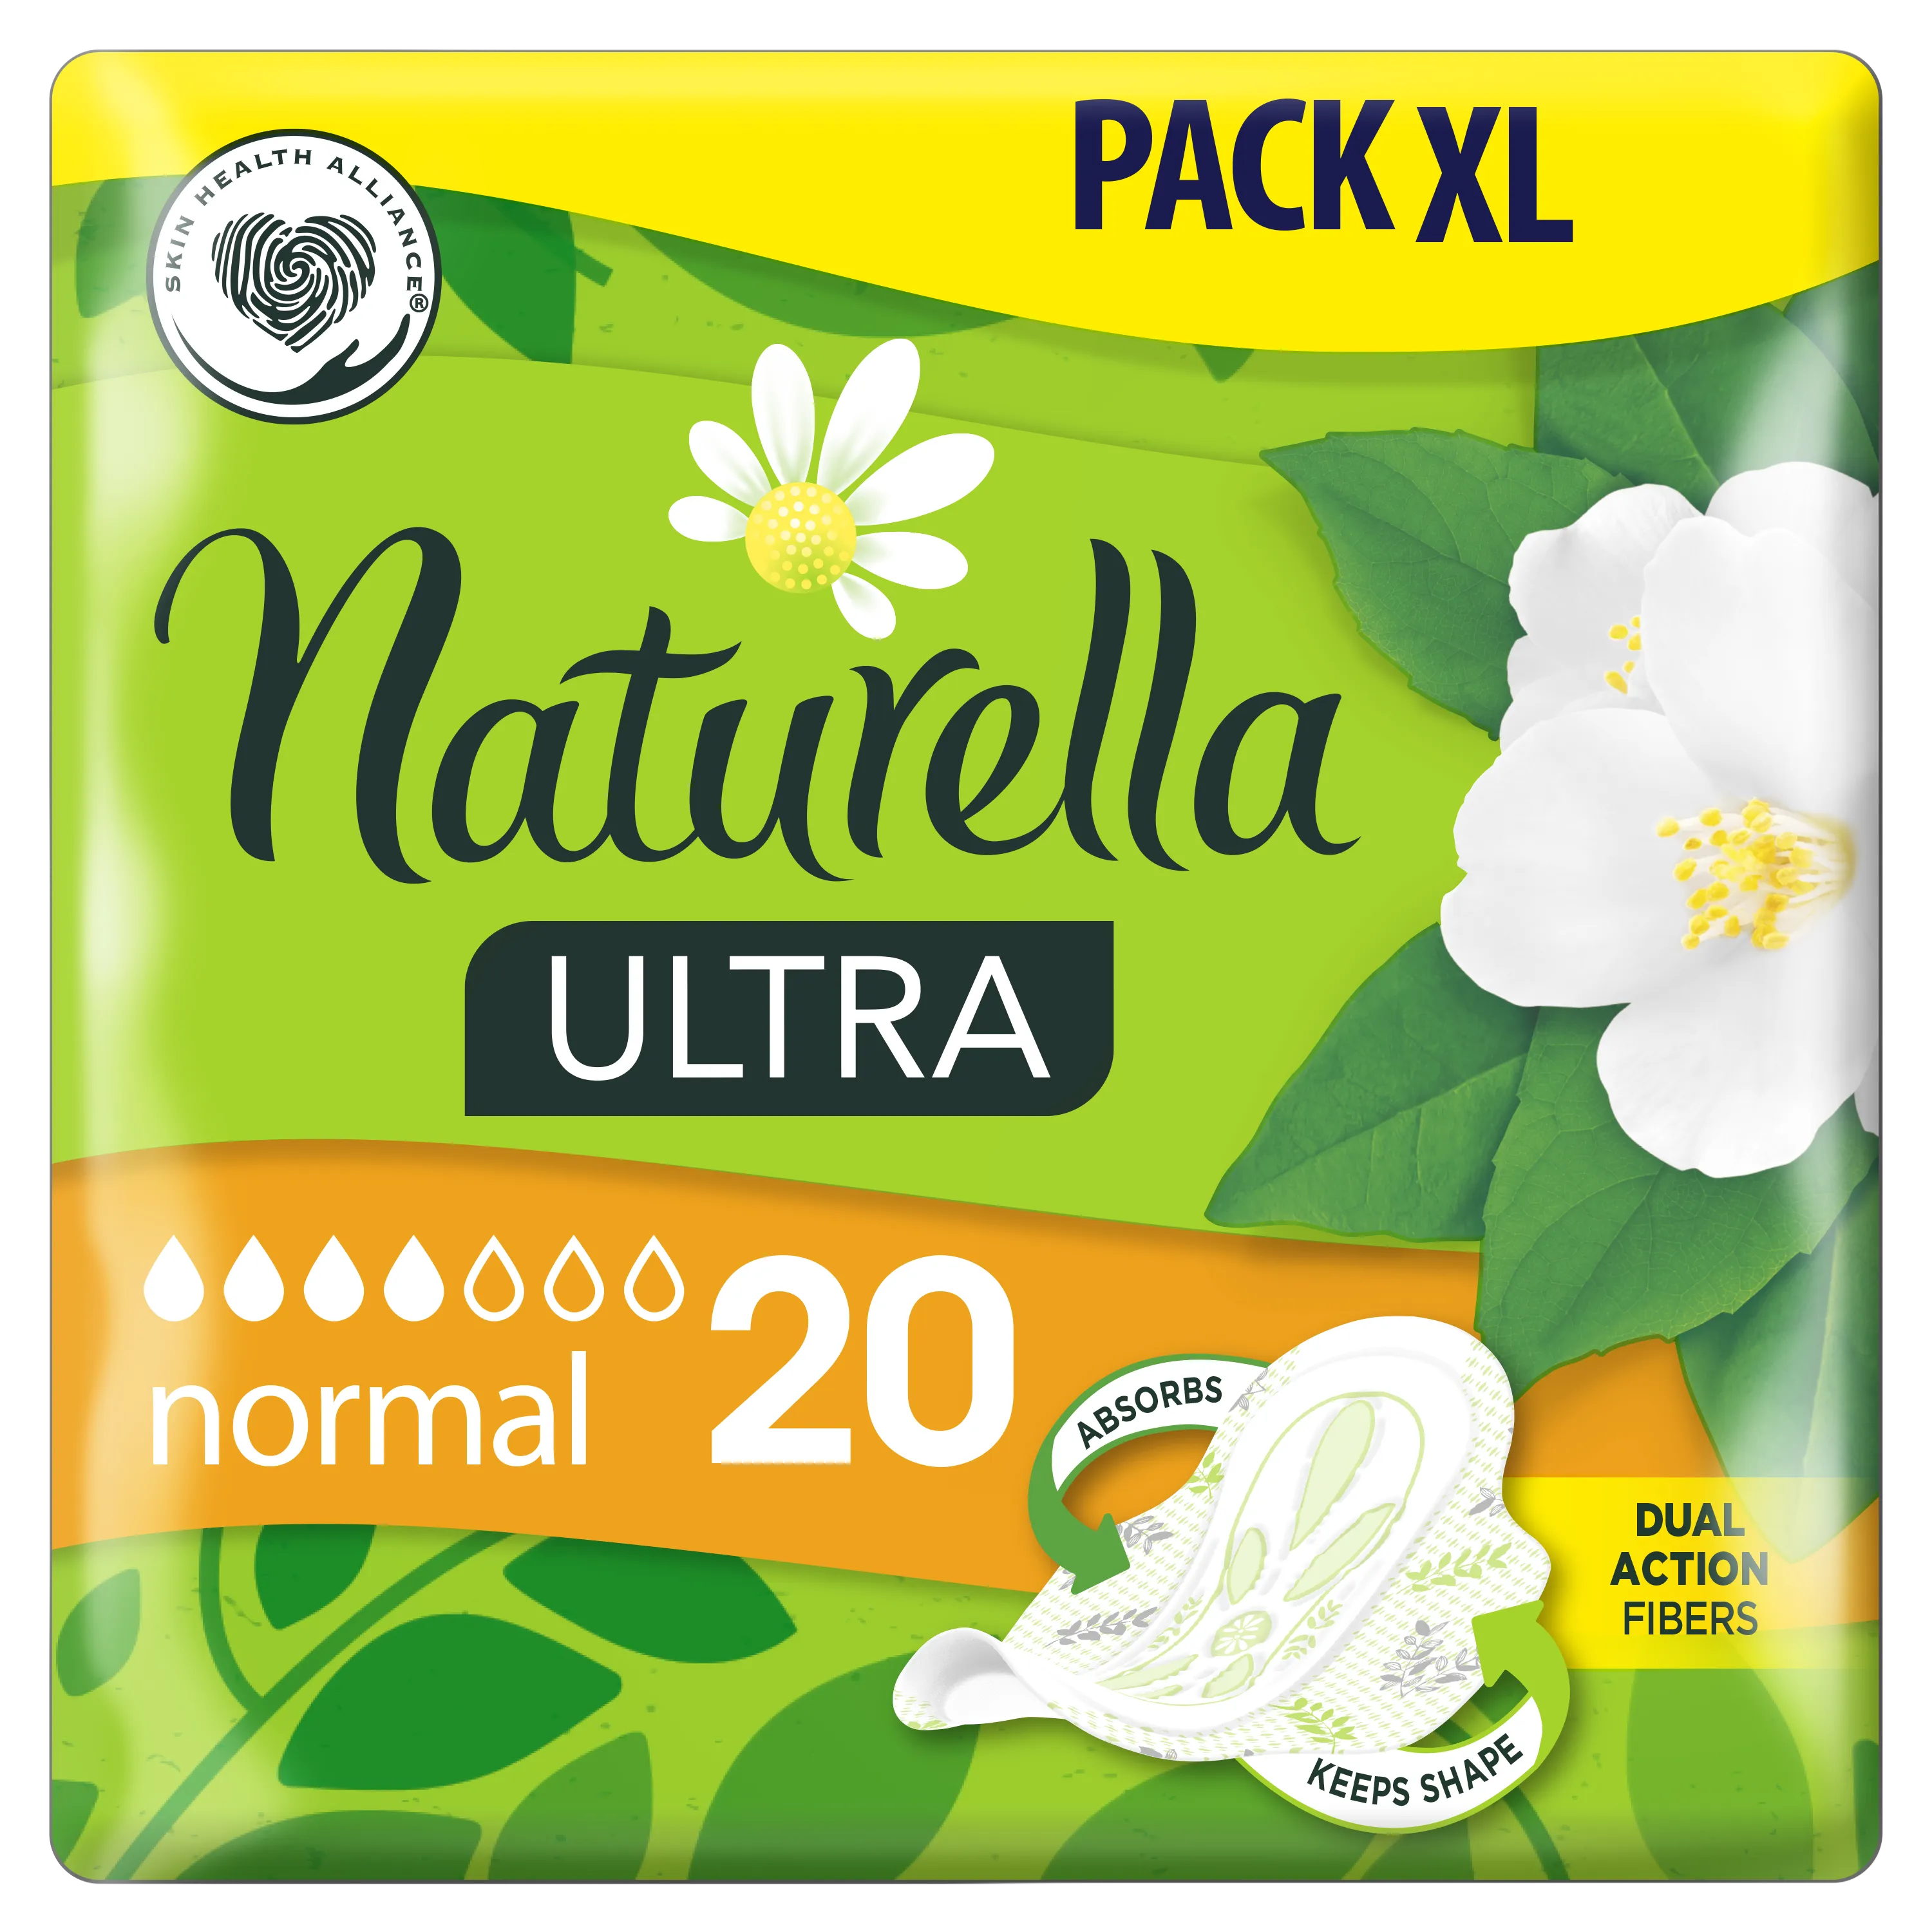 Naturella Ultra Normal podpaski ze skrzydełkami Zielona herbata, 20 szt.